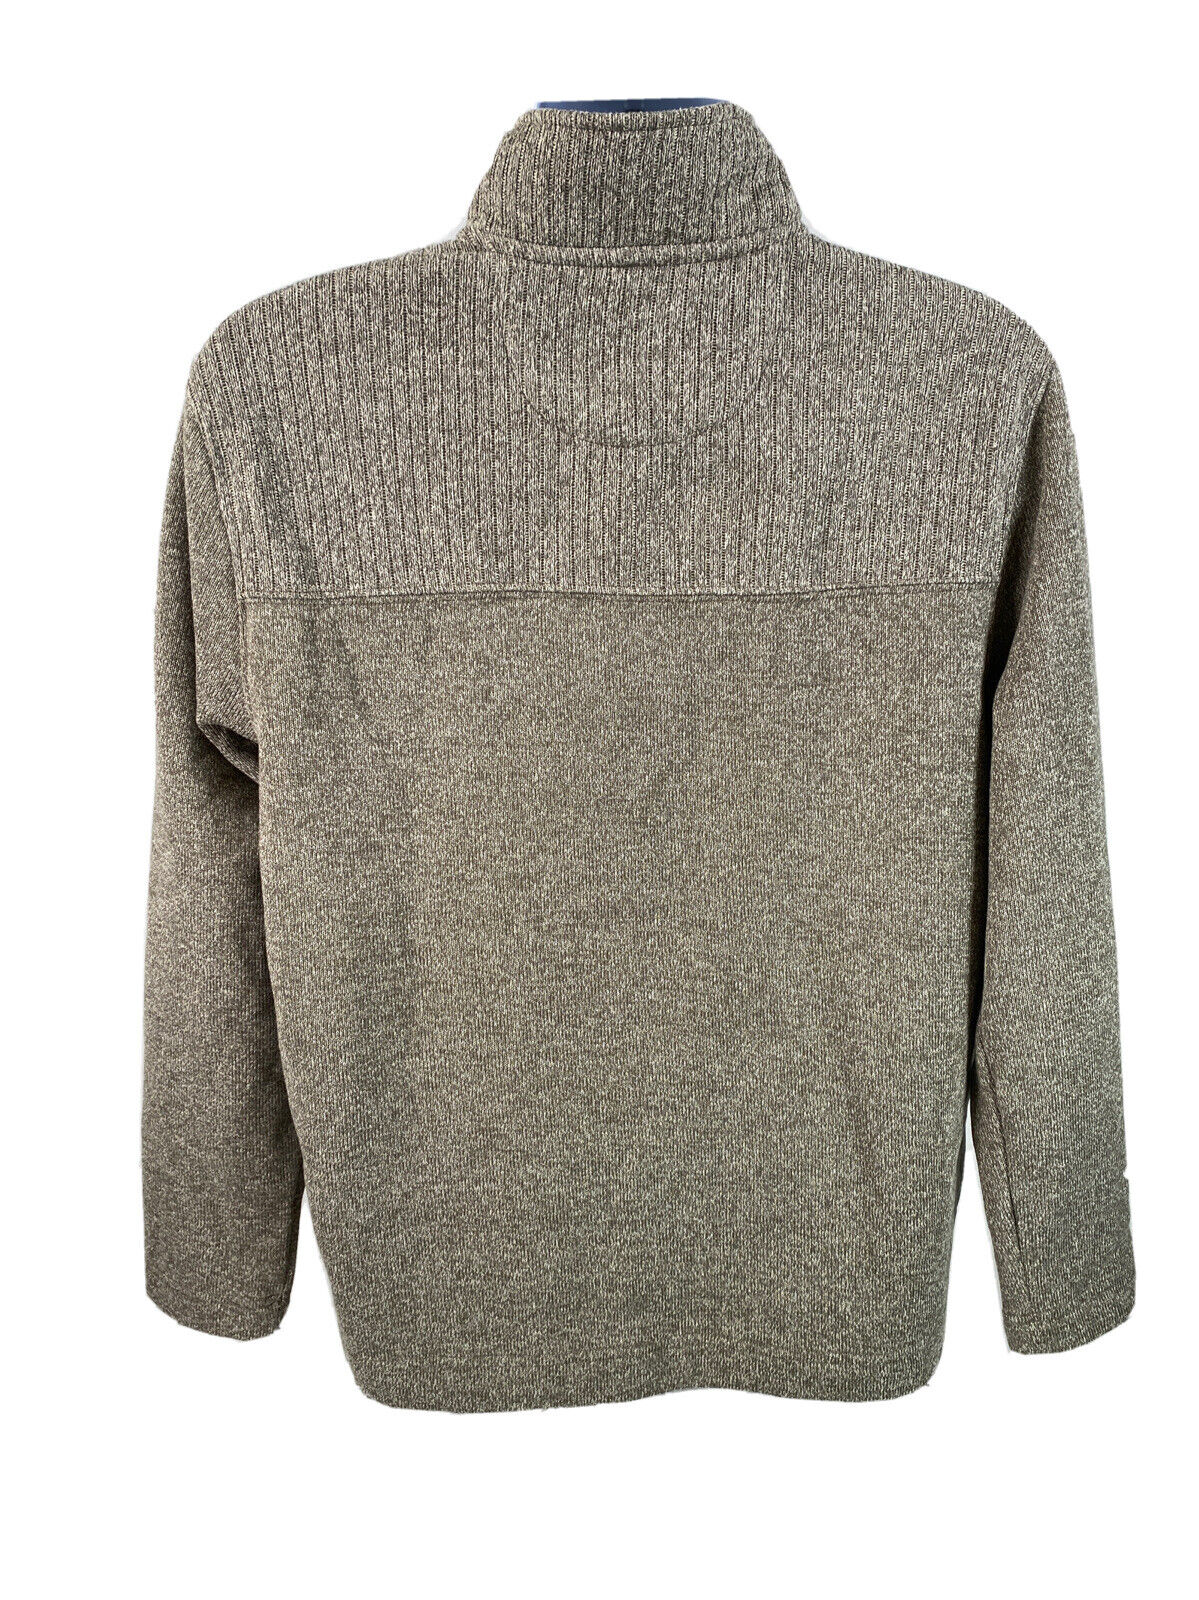 NEW Van Heusen Men's Beige Classic Fit Knit Flex Sweater - M